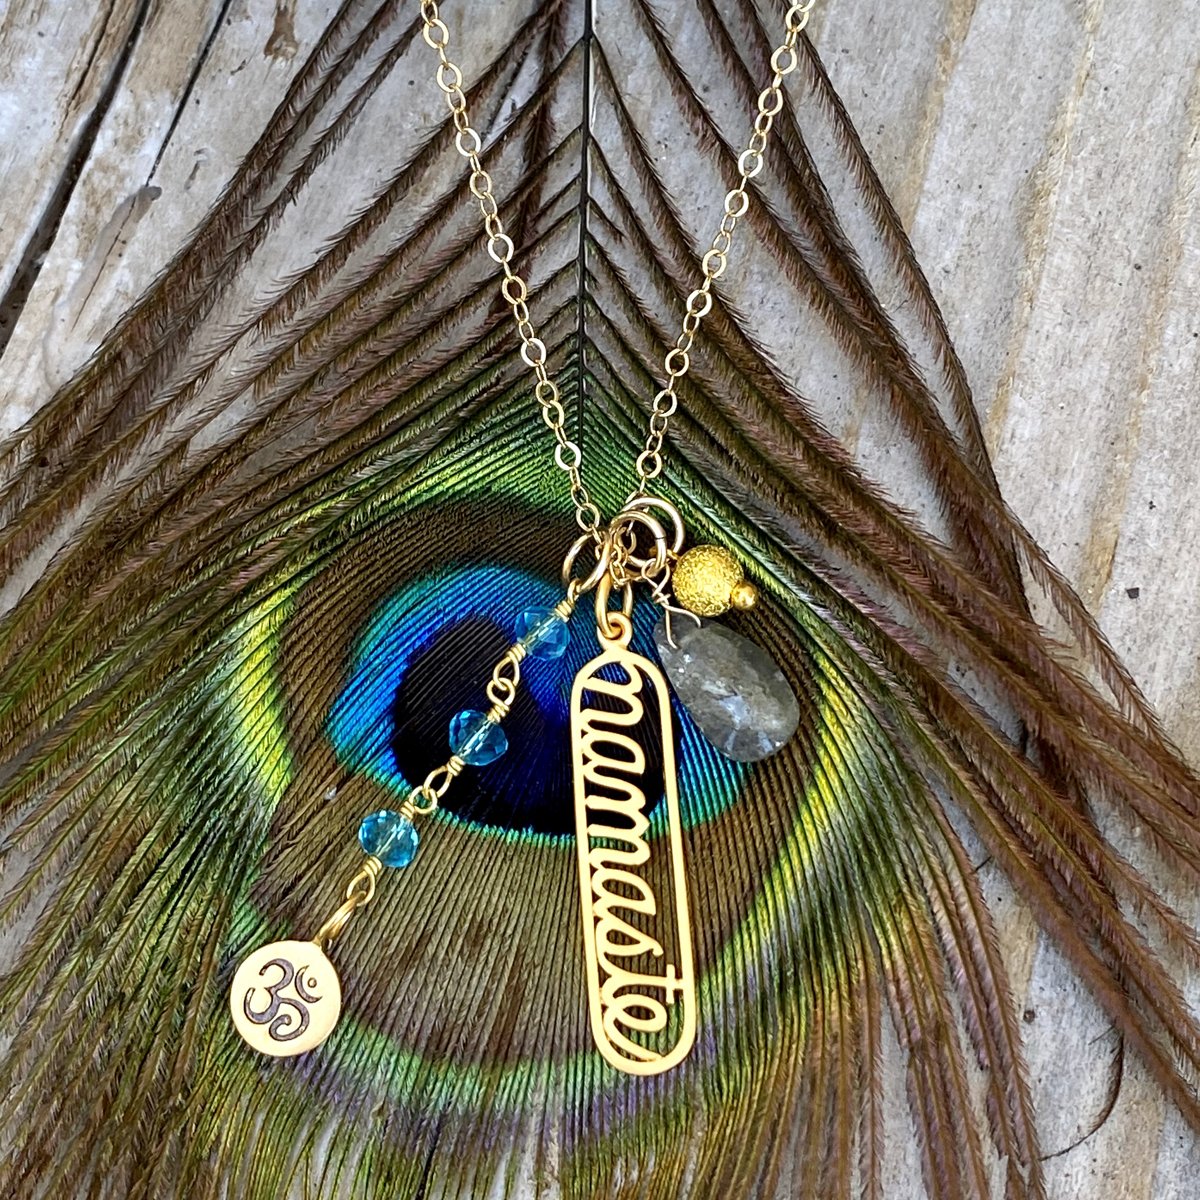 Gold Filled Spiritual Namaste Yoga Necklace with Aquamarine, Ohm and Rutilated Quartz Charms